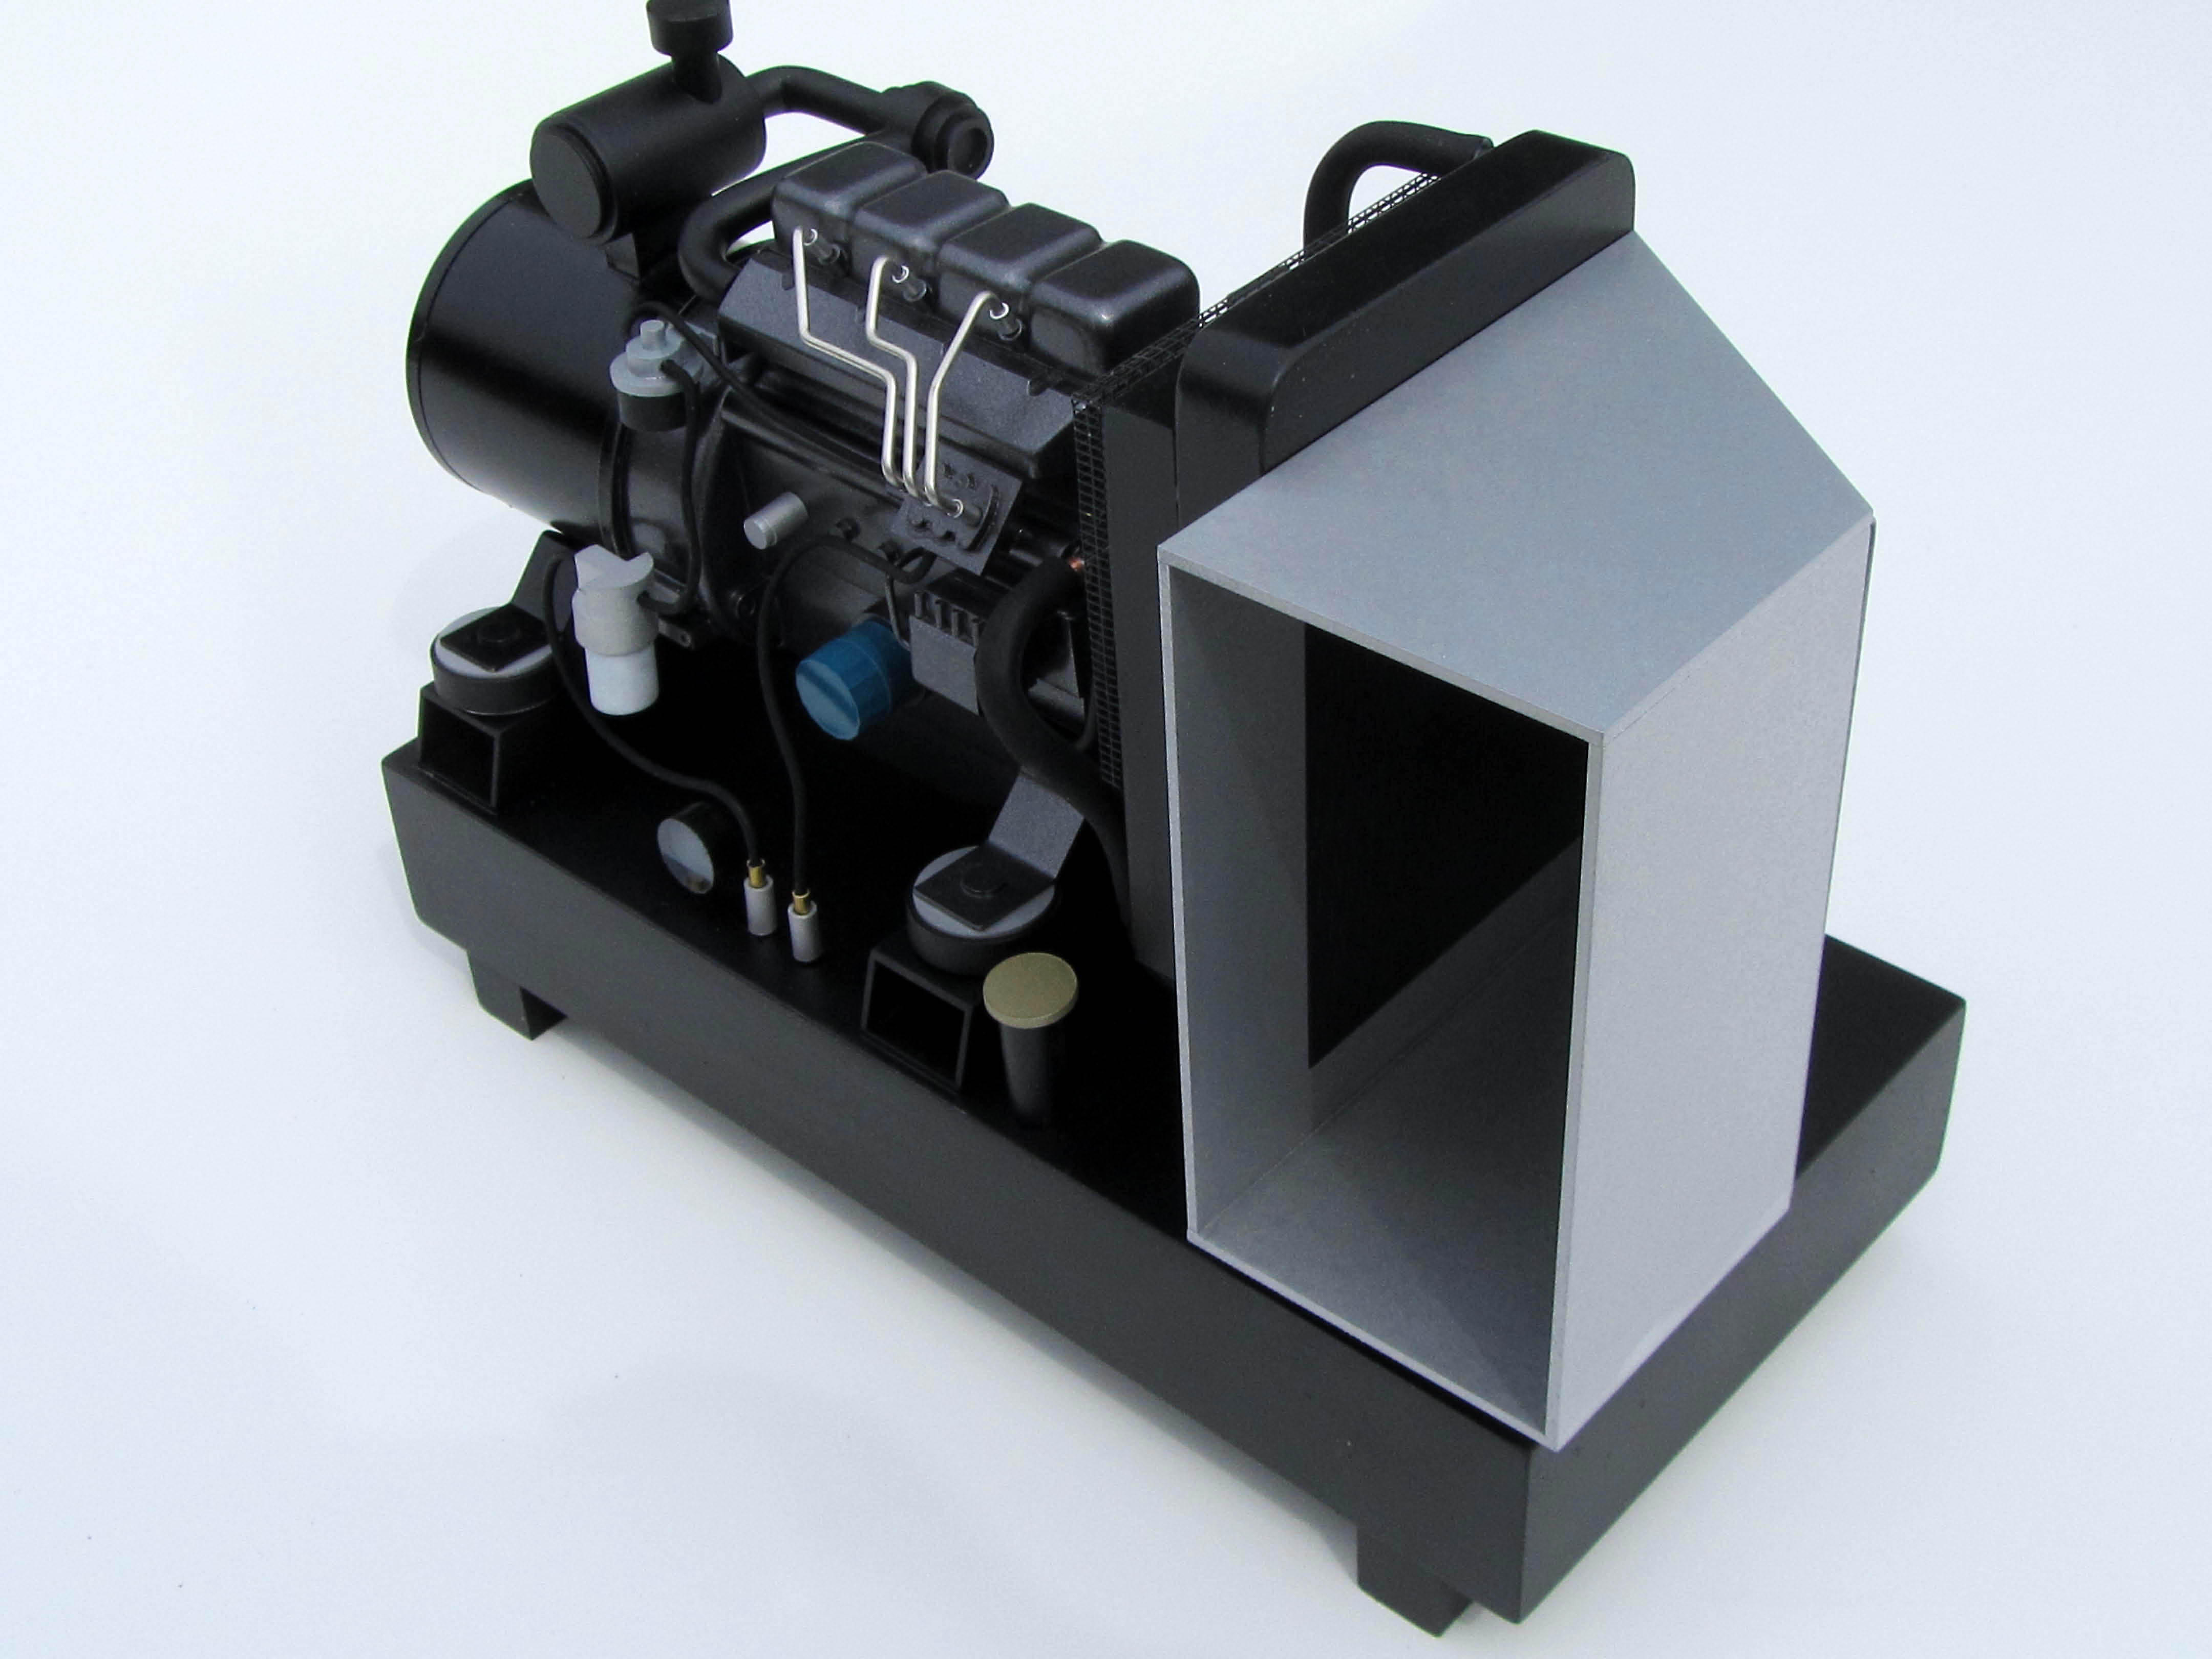 Generator Model